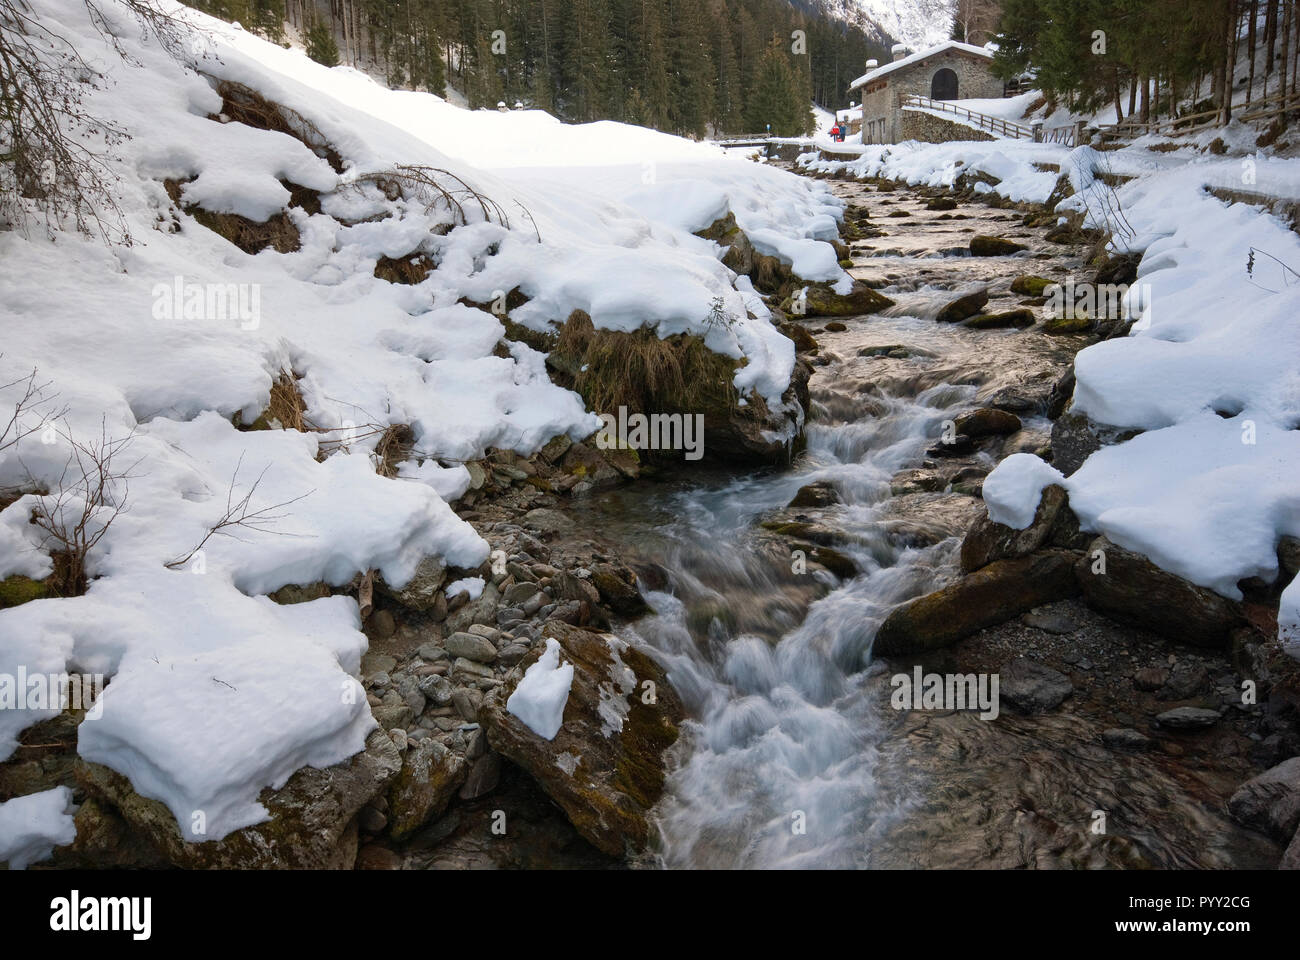 Winter scenery of Val Brandet in Valli di Sant'Antonio (Saint Anthony Valleys), Orobie Alps, Lombardy, Italy Stock Photo